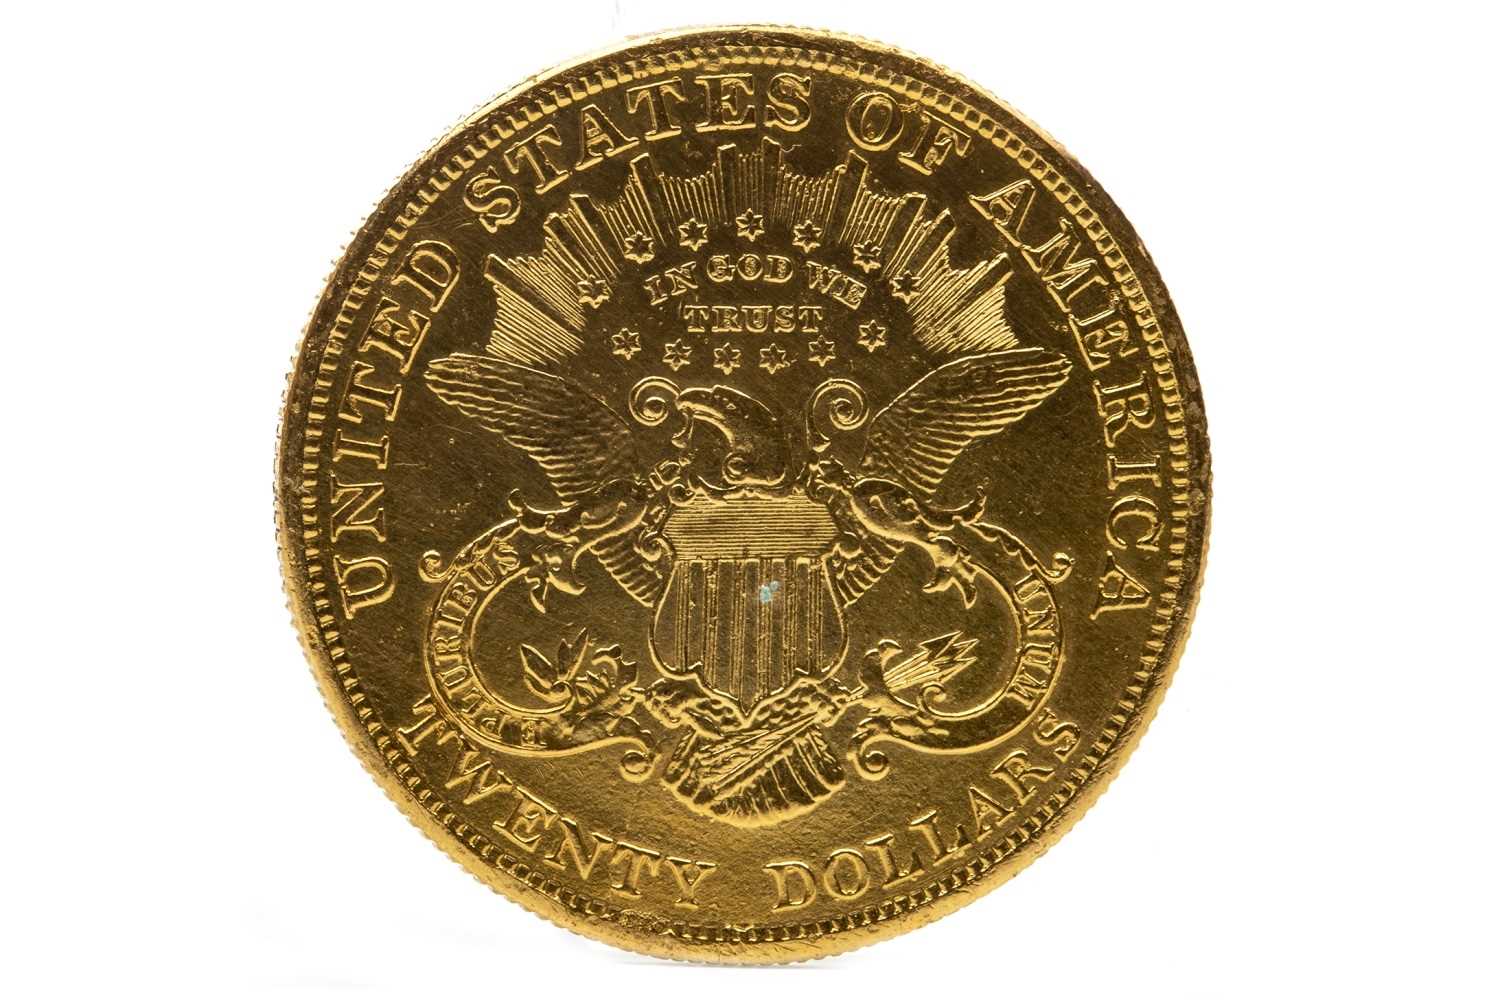 Lot 619 - A USA GOLD $20 COIN, 1904